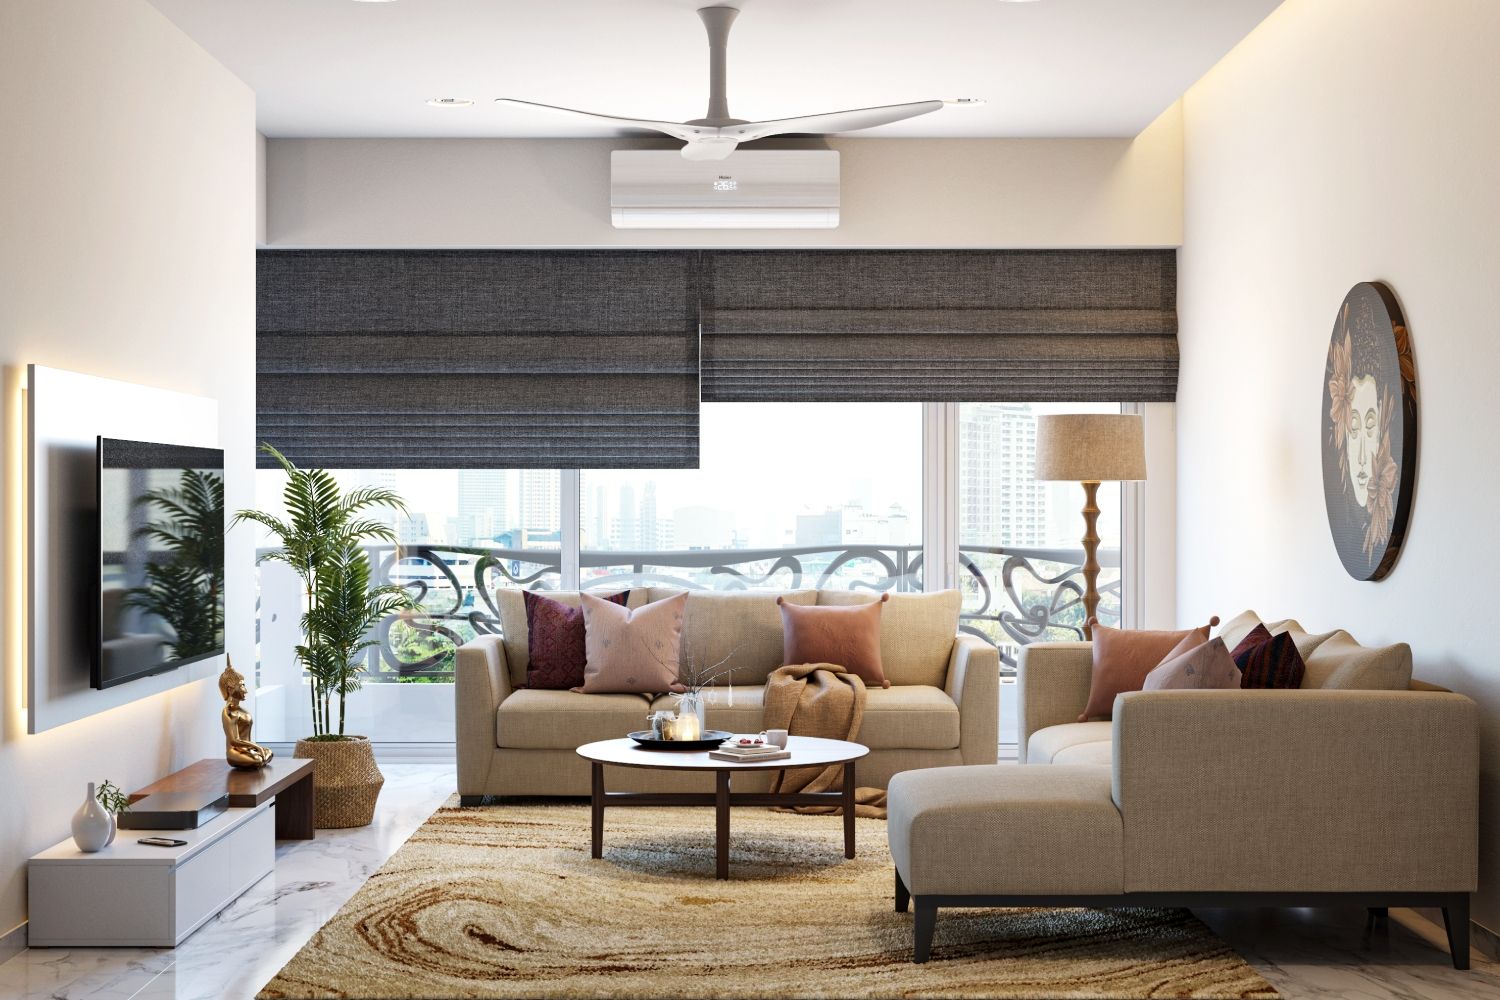 Modern Beige And Grey Living Room Design With Large Beige Floor Rug